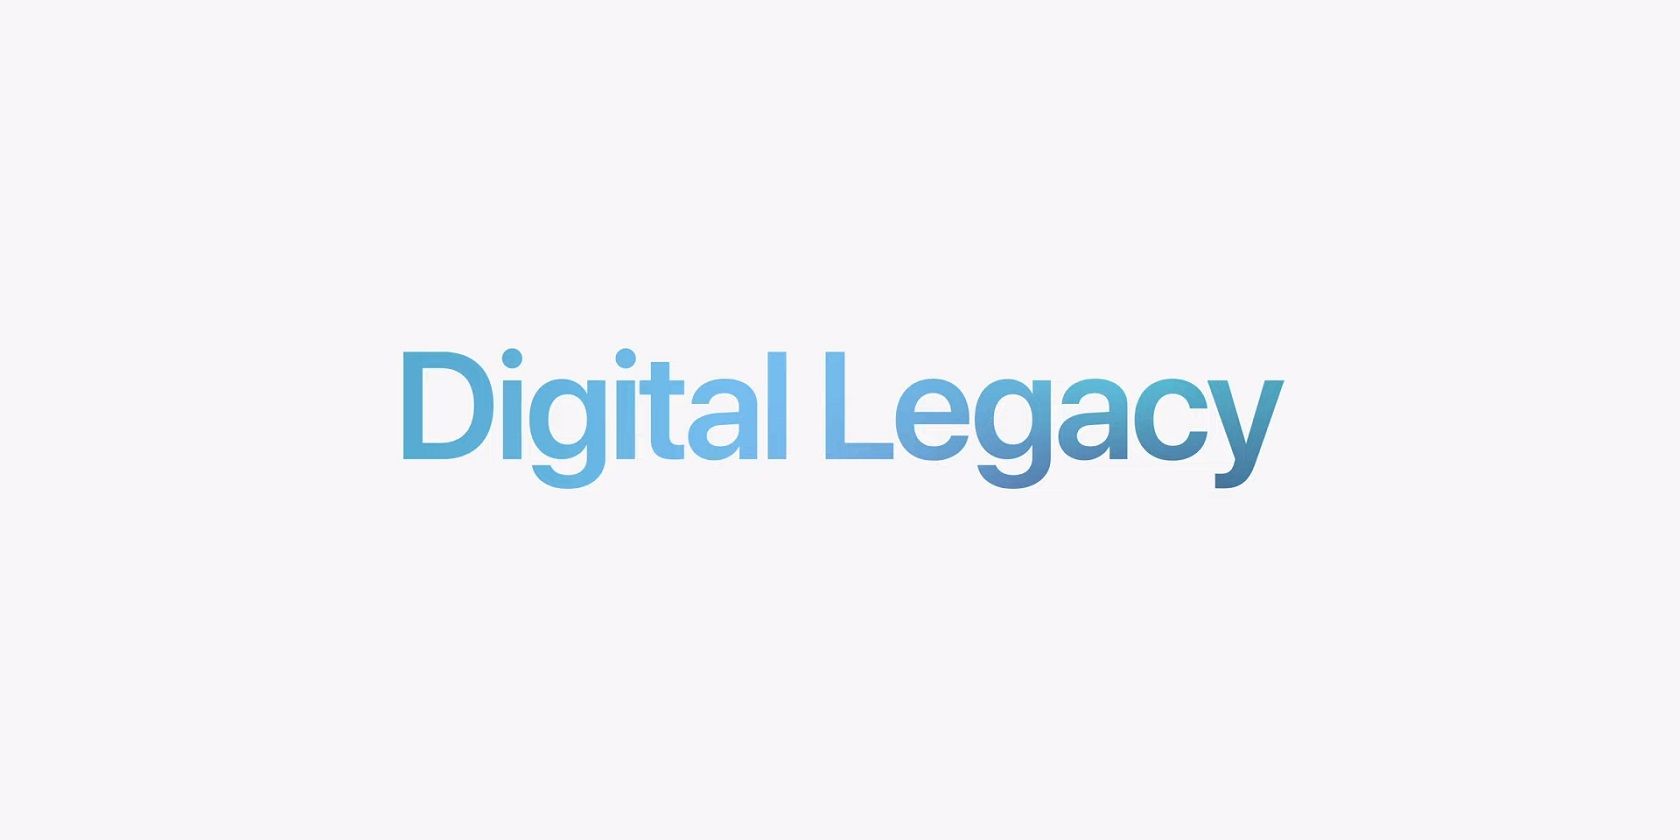 Apple's Digital Legacy program